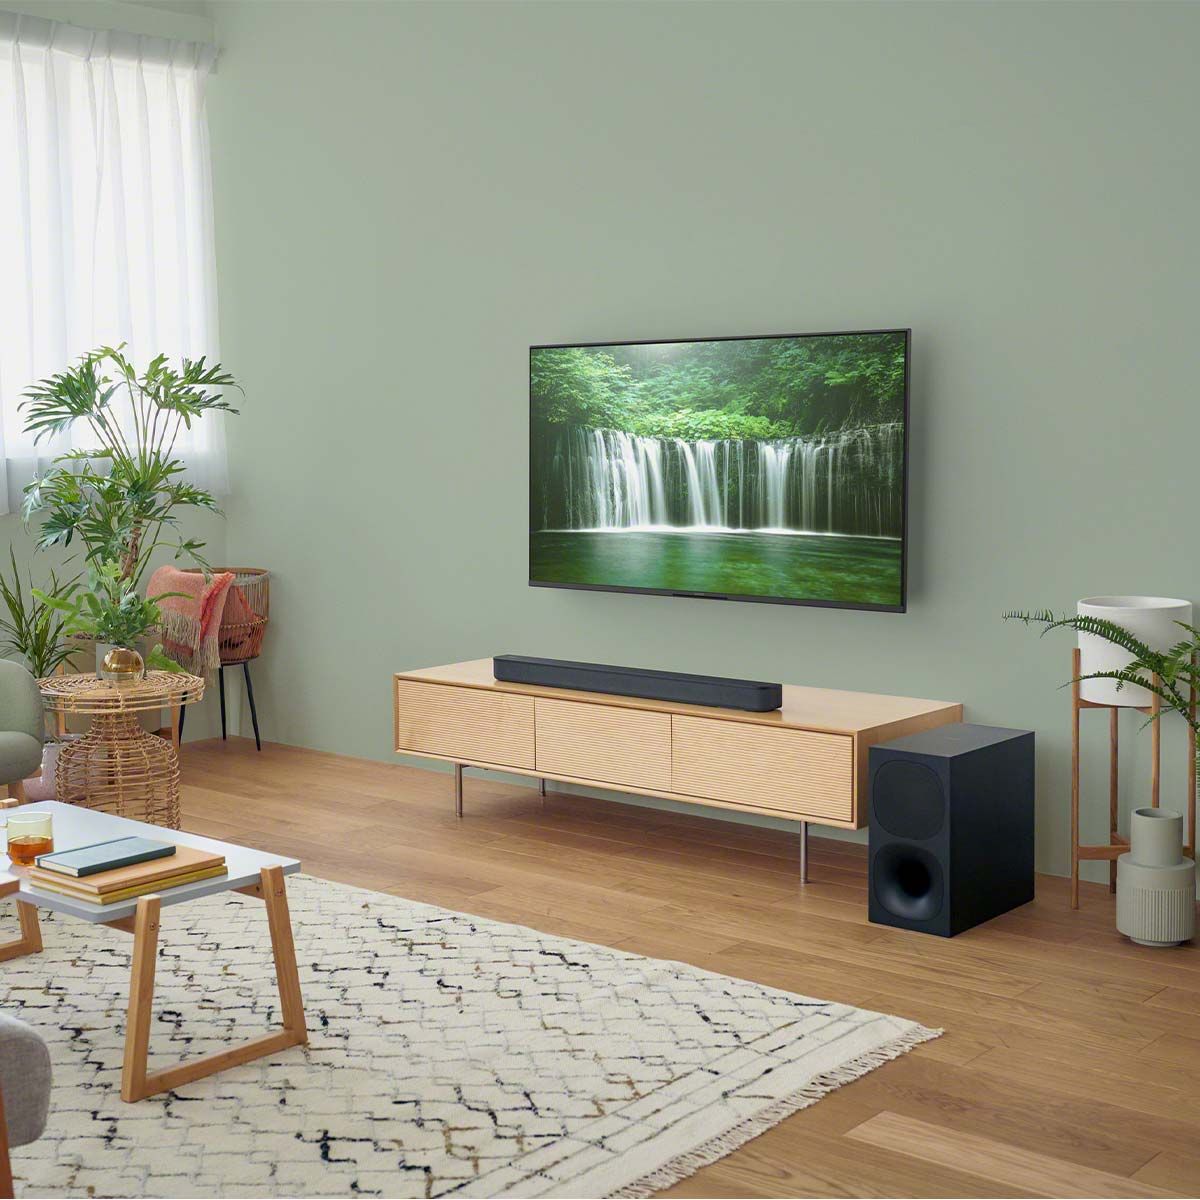 Sony HTS400 2.1ch Soundbar w/ Wireless Subwoofer - sitting on media center in living room